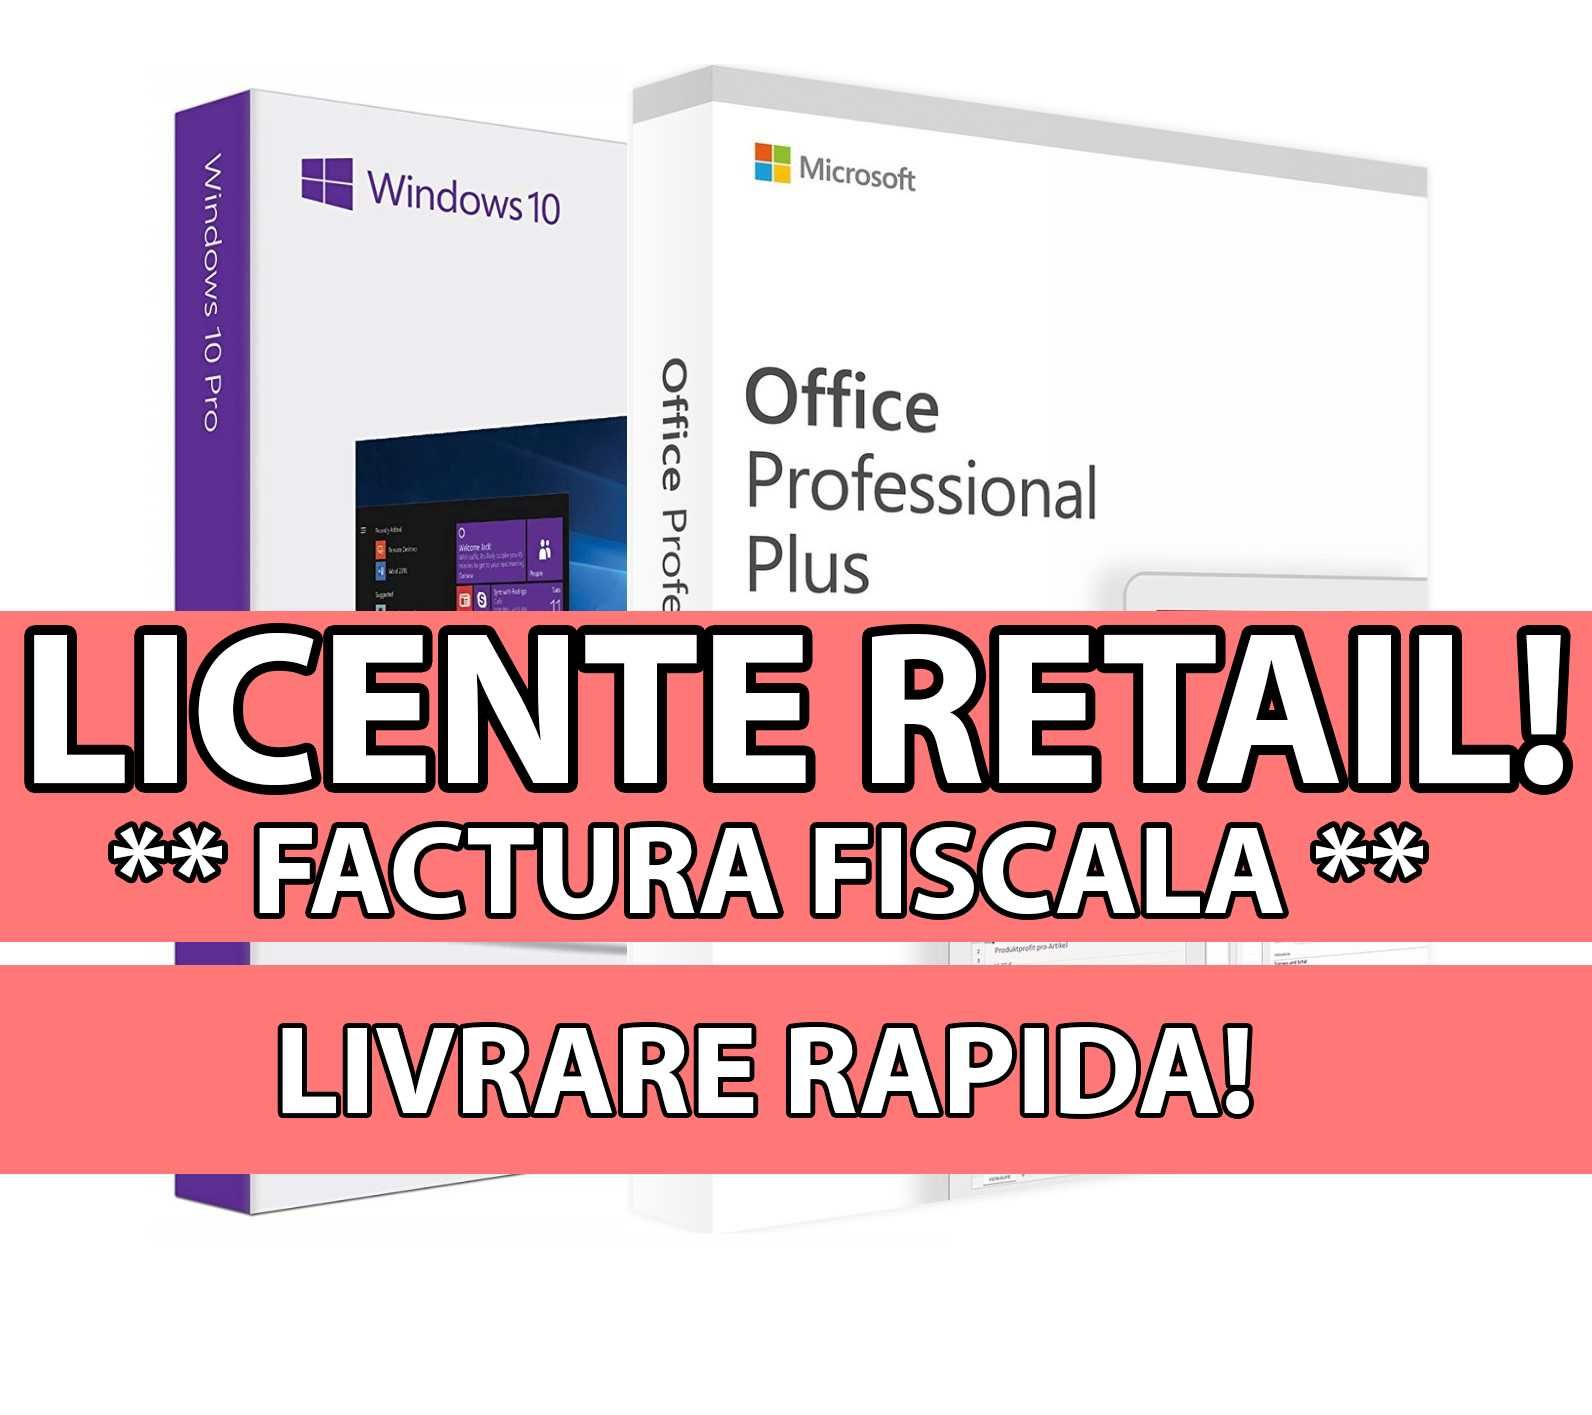 Windows 10 PRO + Office 2019 Pro Plus - LICENTE RETAIL (Factura!)